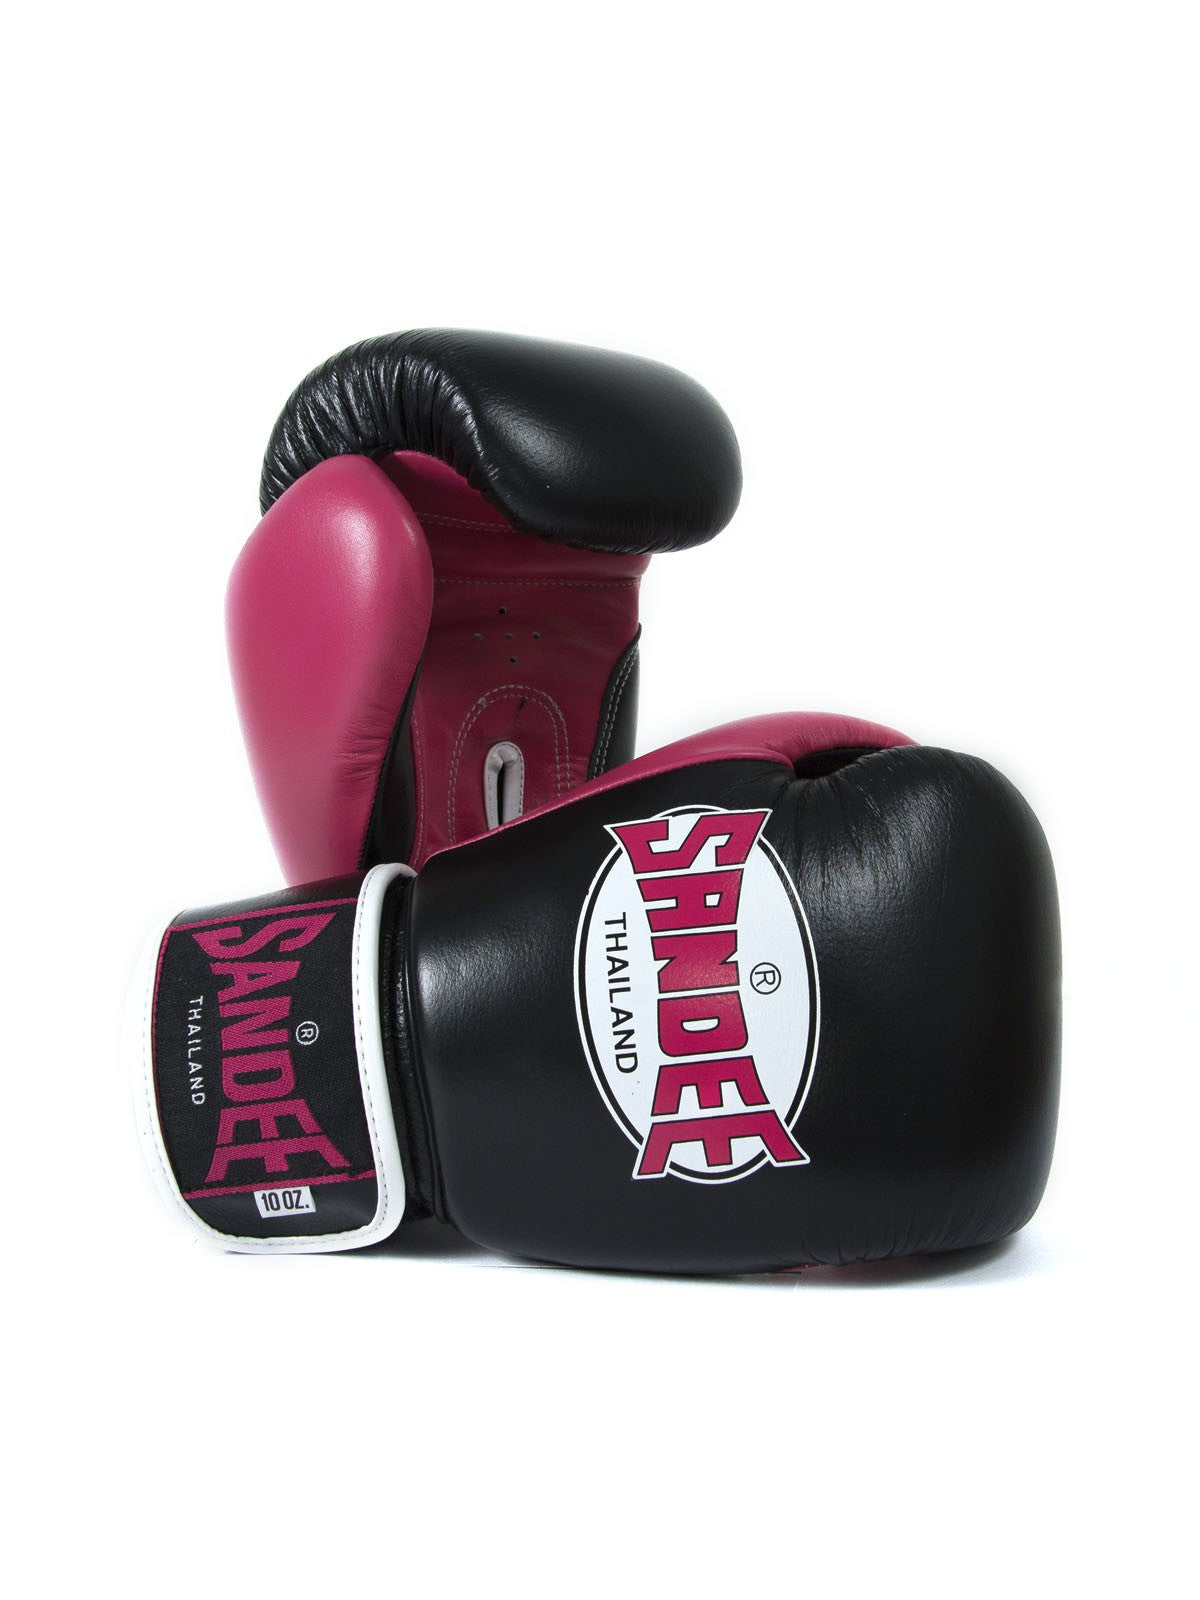 Sandee Neon Velcro Leather Boxing Glove